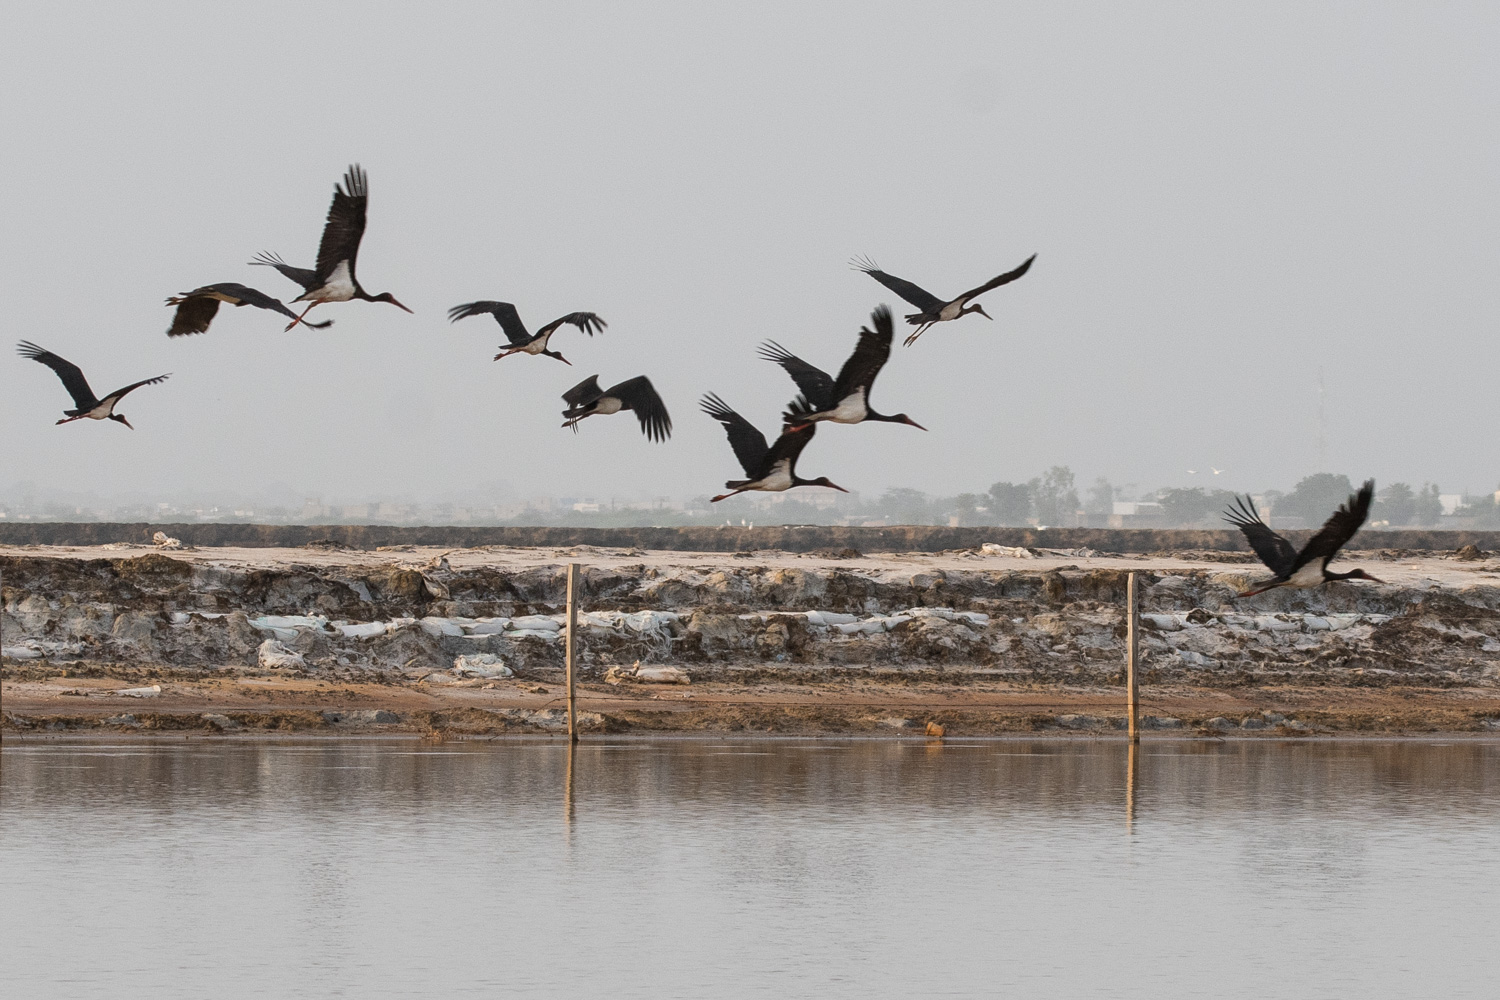 Cigognes noires (Black Stork, Ciconia Nigra), envol devant la zone de production de sel de la ville de Kaolack, Sénégal.